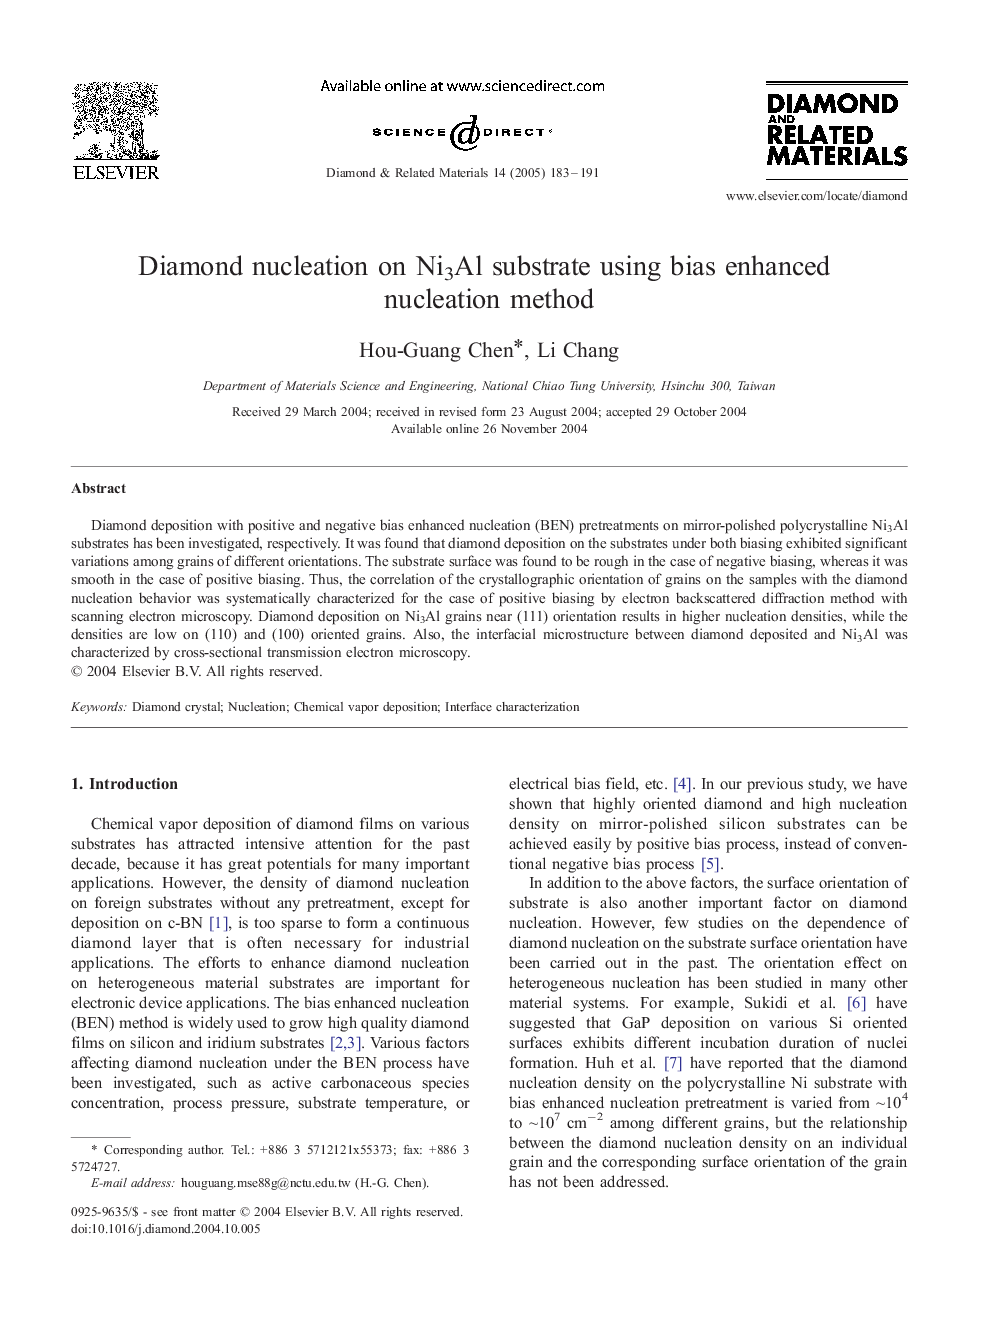 Diamond nucleation on Ni3Al substrate using bias enhanced nucleation method